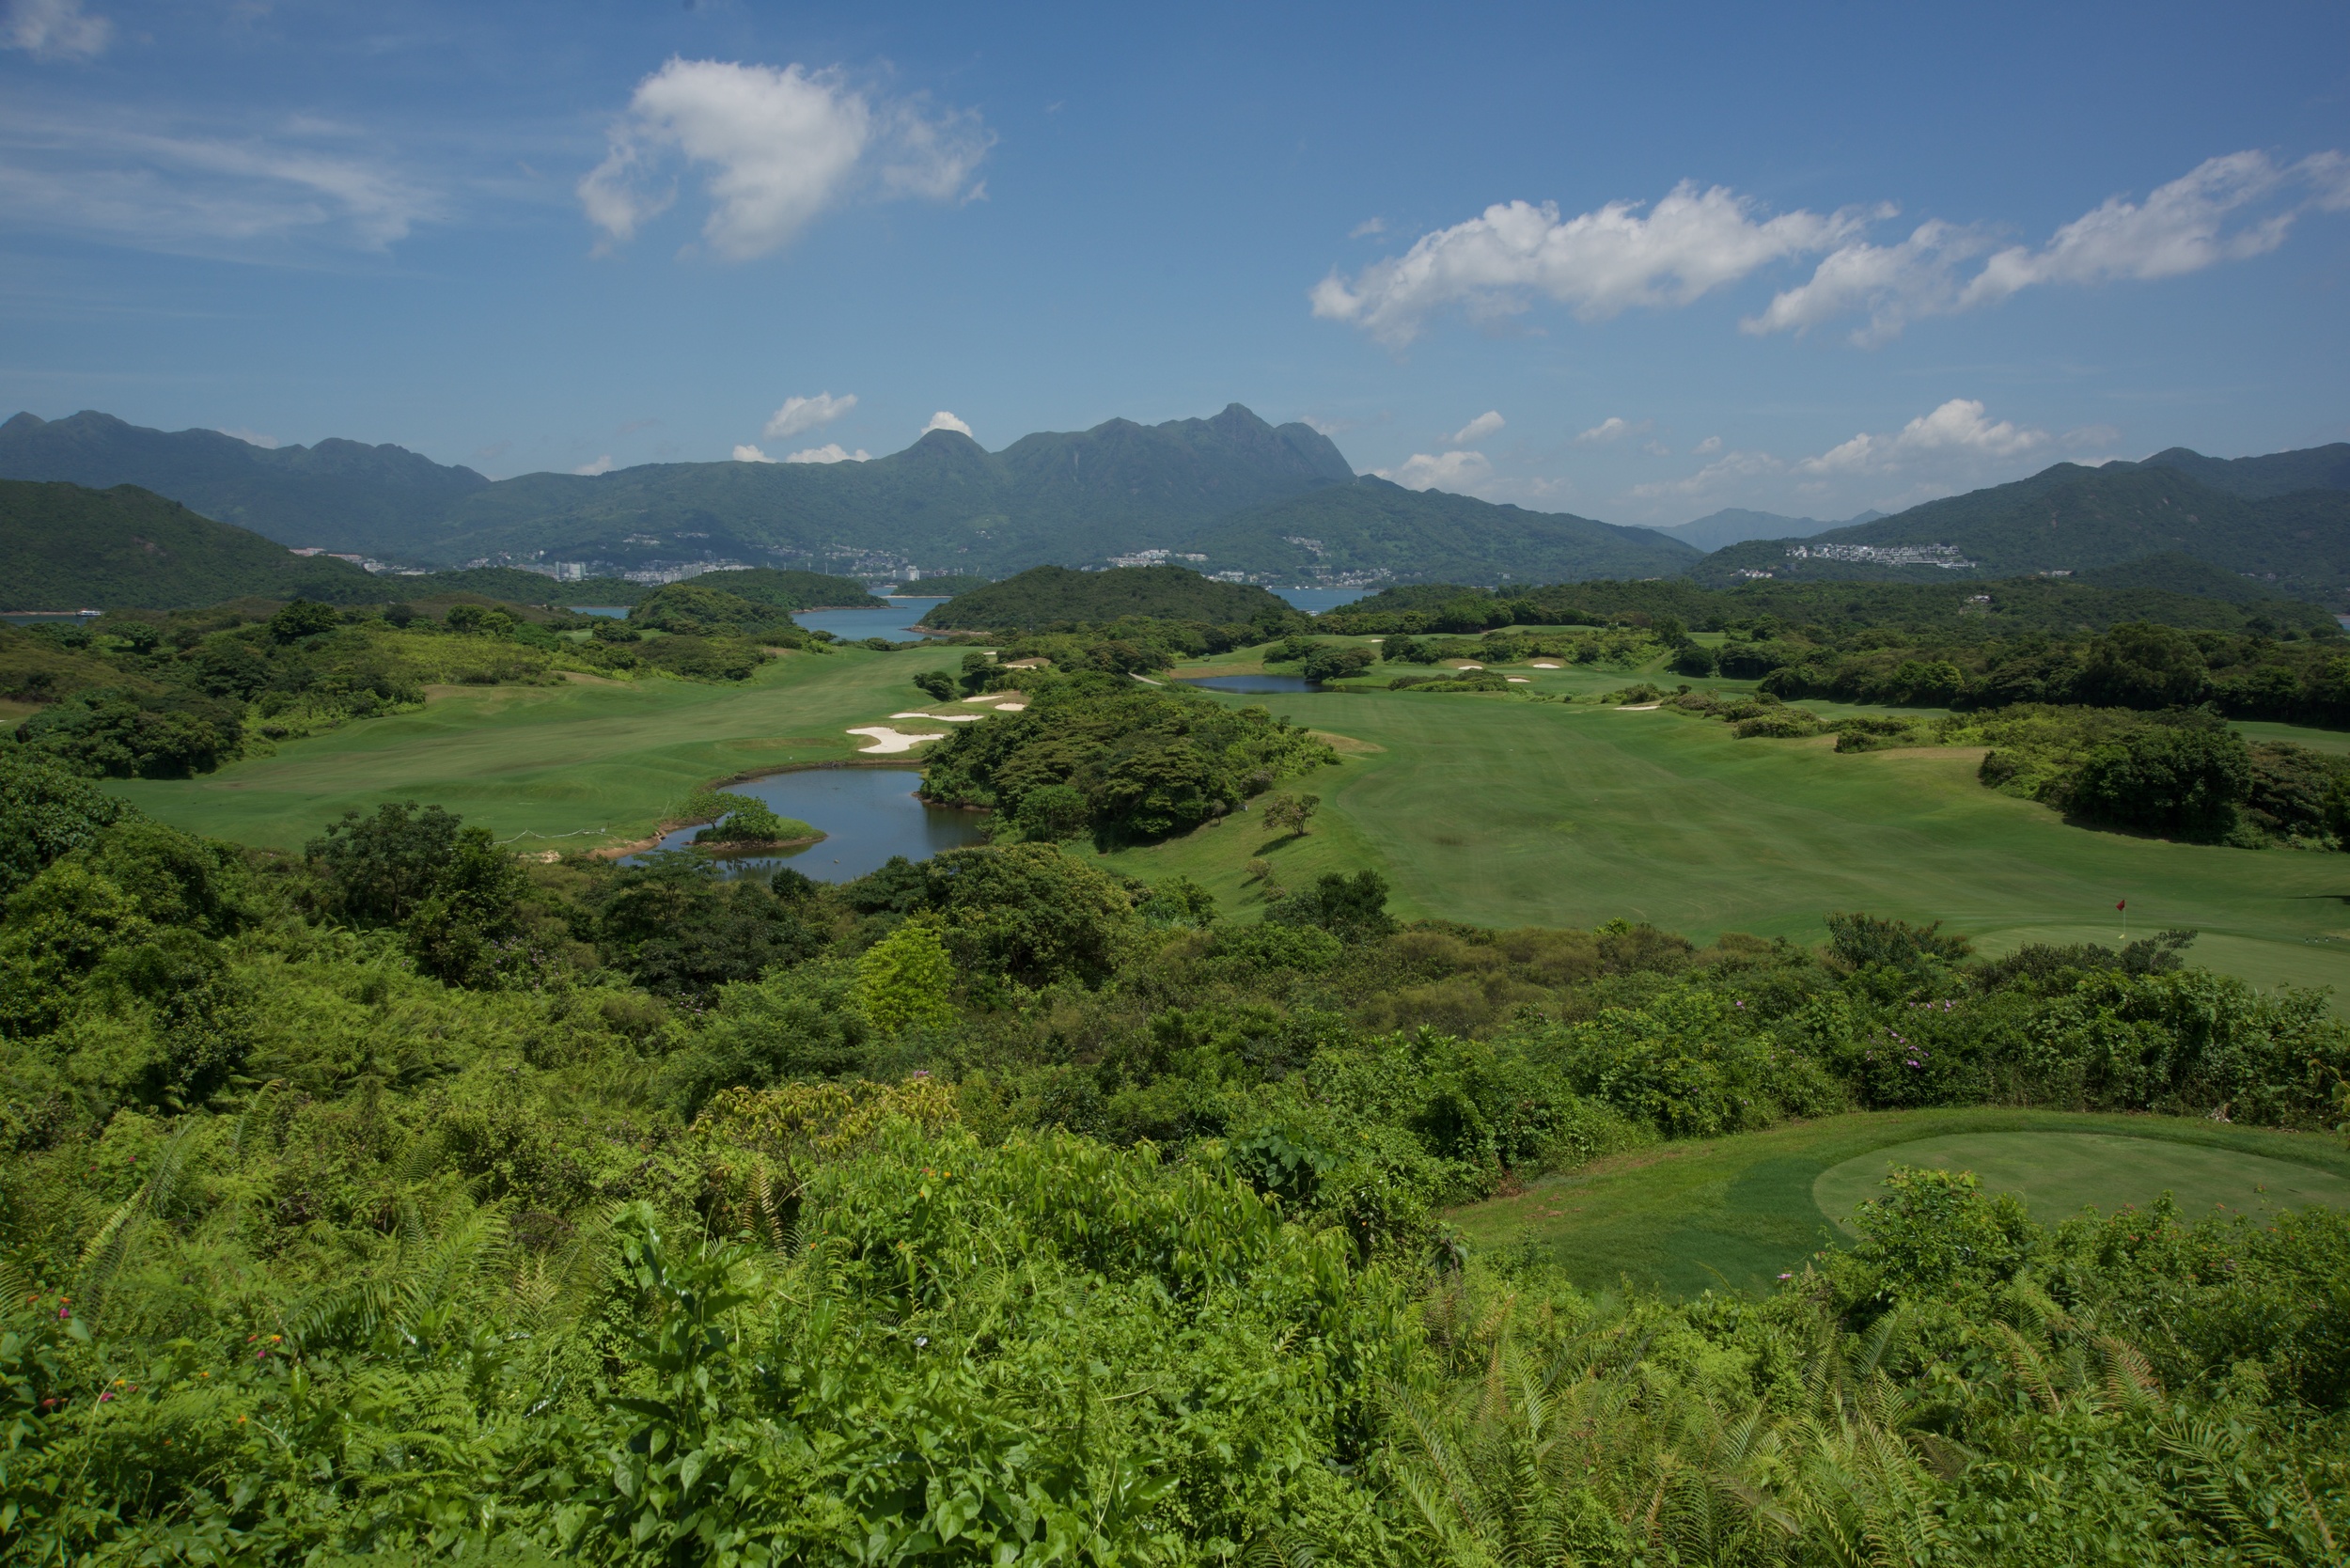  Golf course, Kau Sai Chau Island, Hong Kong 